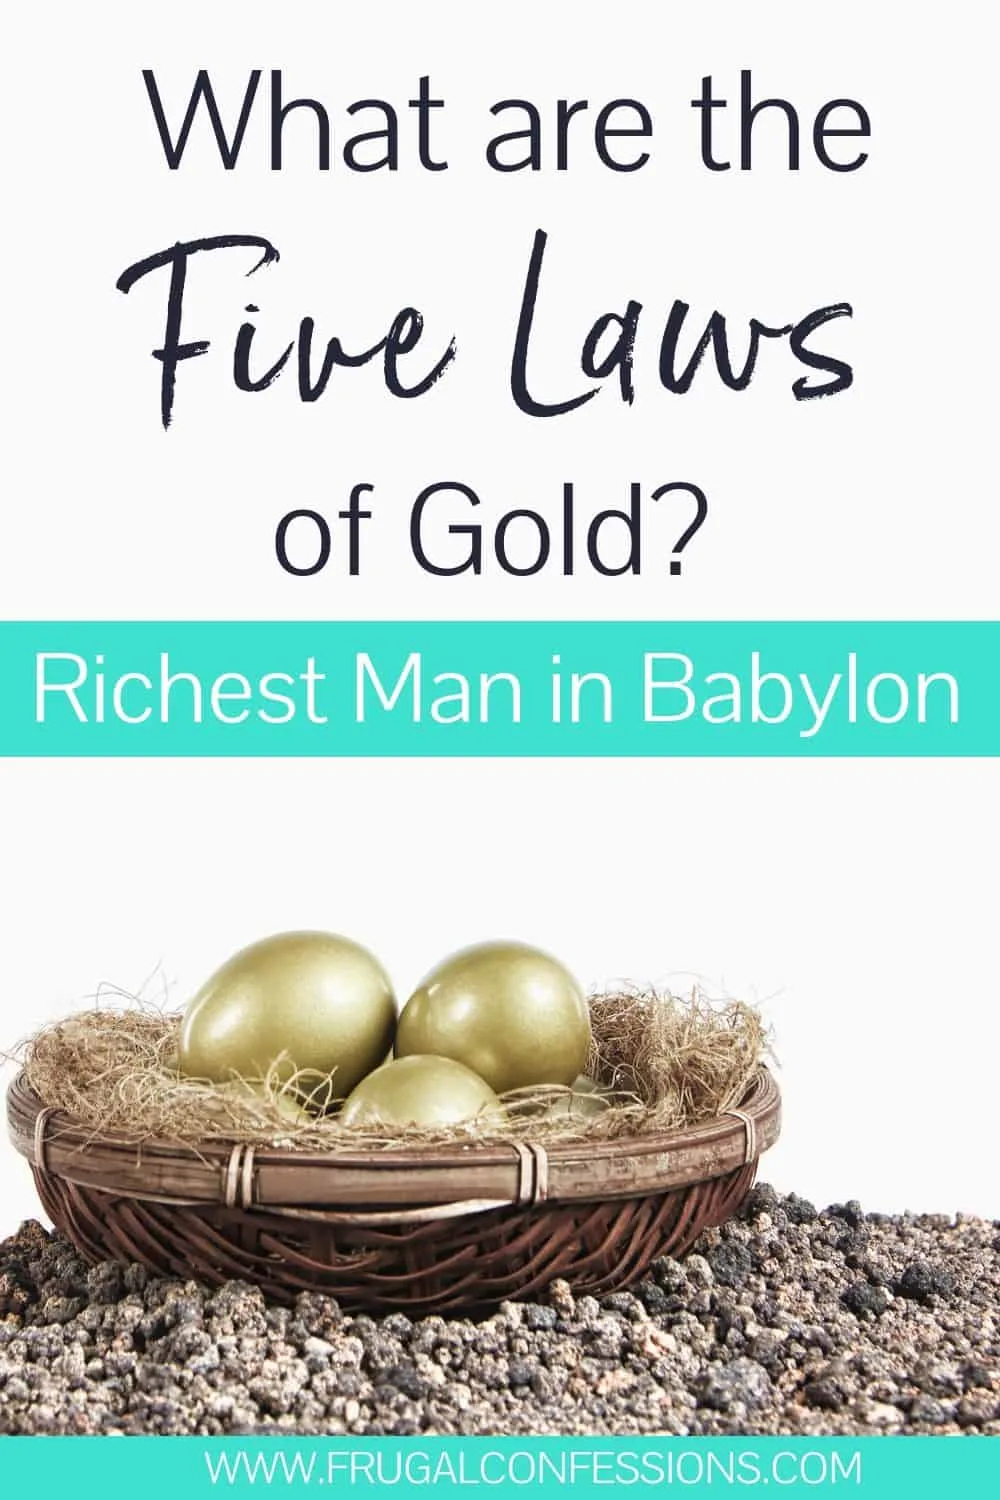 George Samuel Clason: The Richest Man in Babylon Book Summary |  Bestbookbits | Daily Book Summaries | Written | Video | Audio